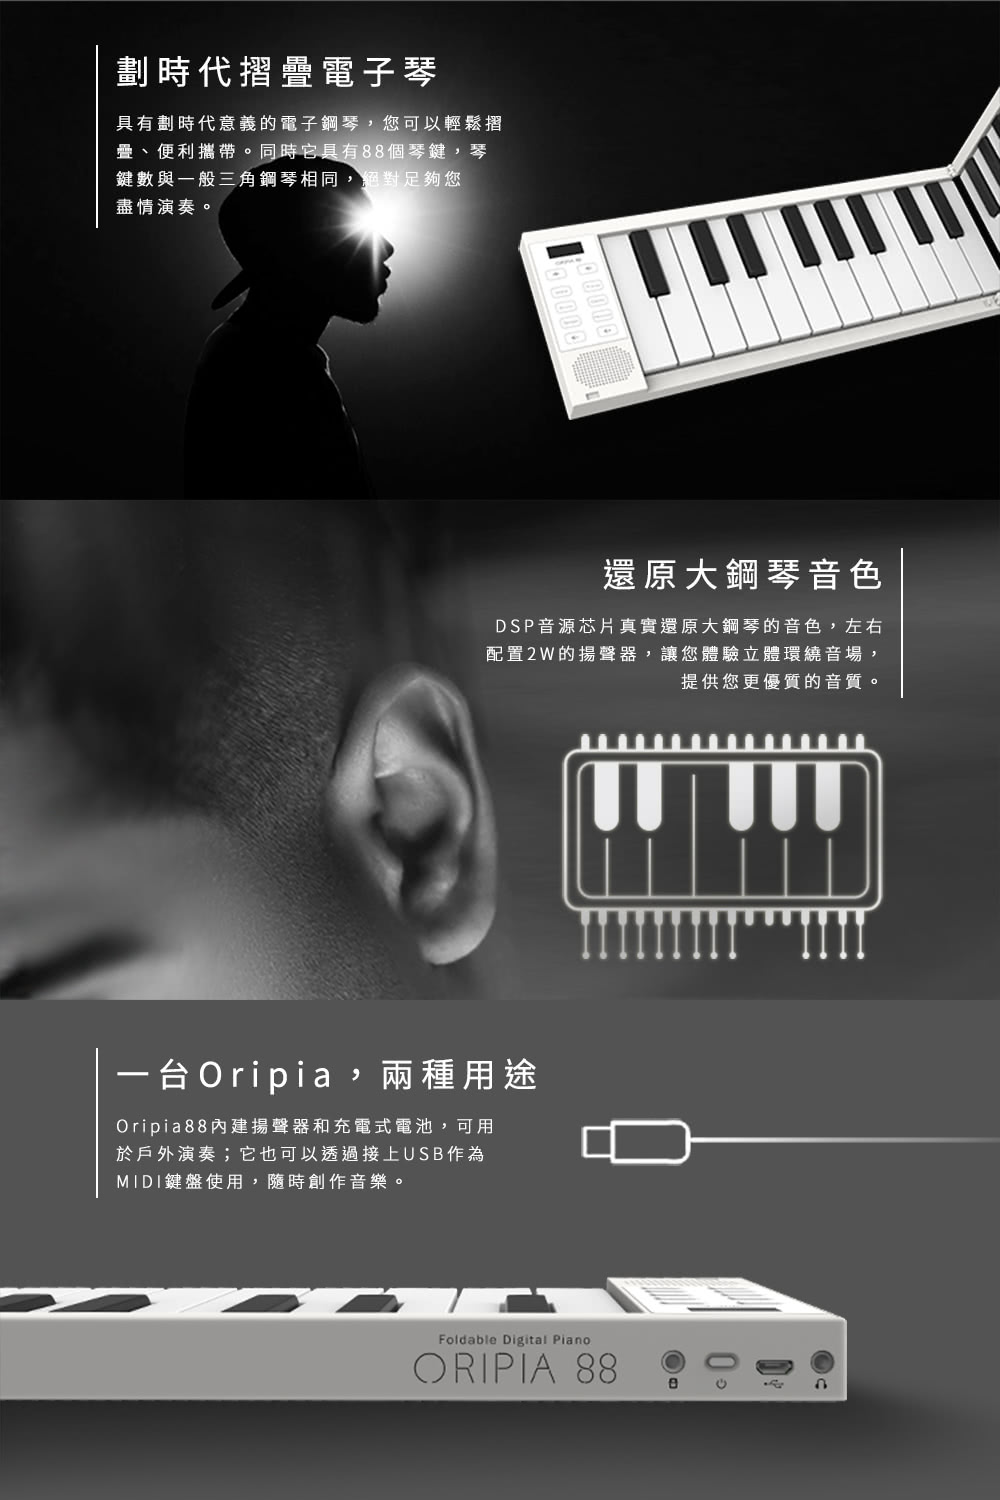 TaHorng】Oripia88摺疊電子琴MIDI主控鍵盤(88鍵電子琴/主控鍵盤) - momo購物網